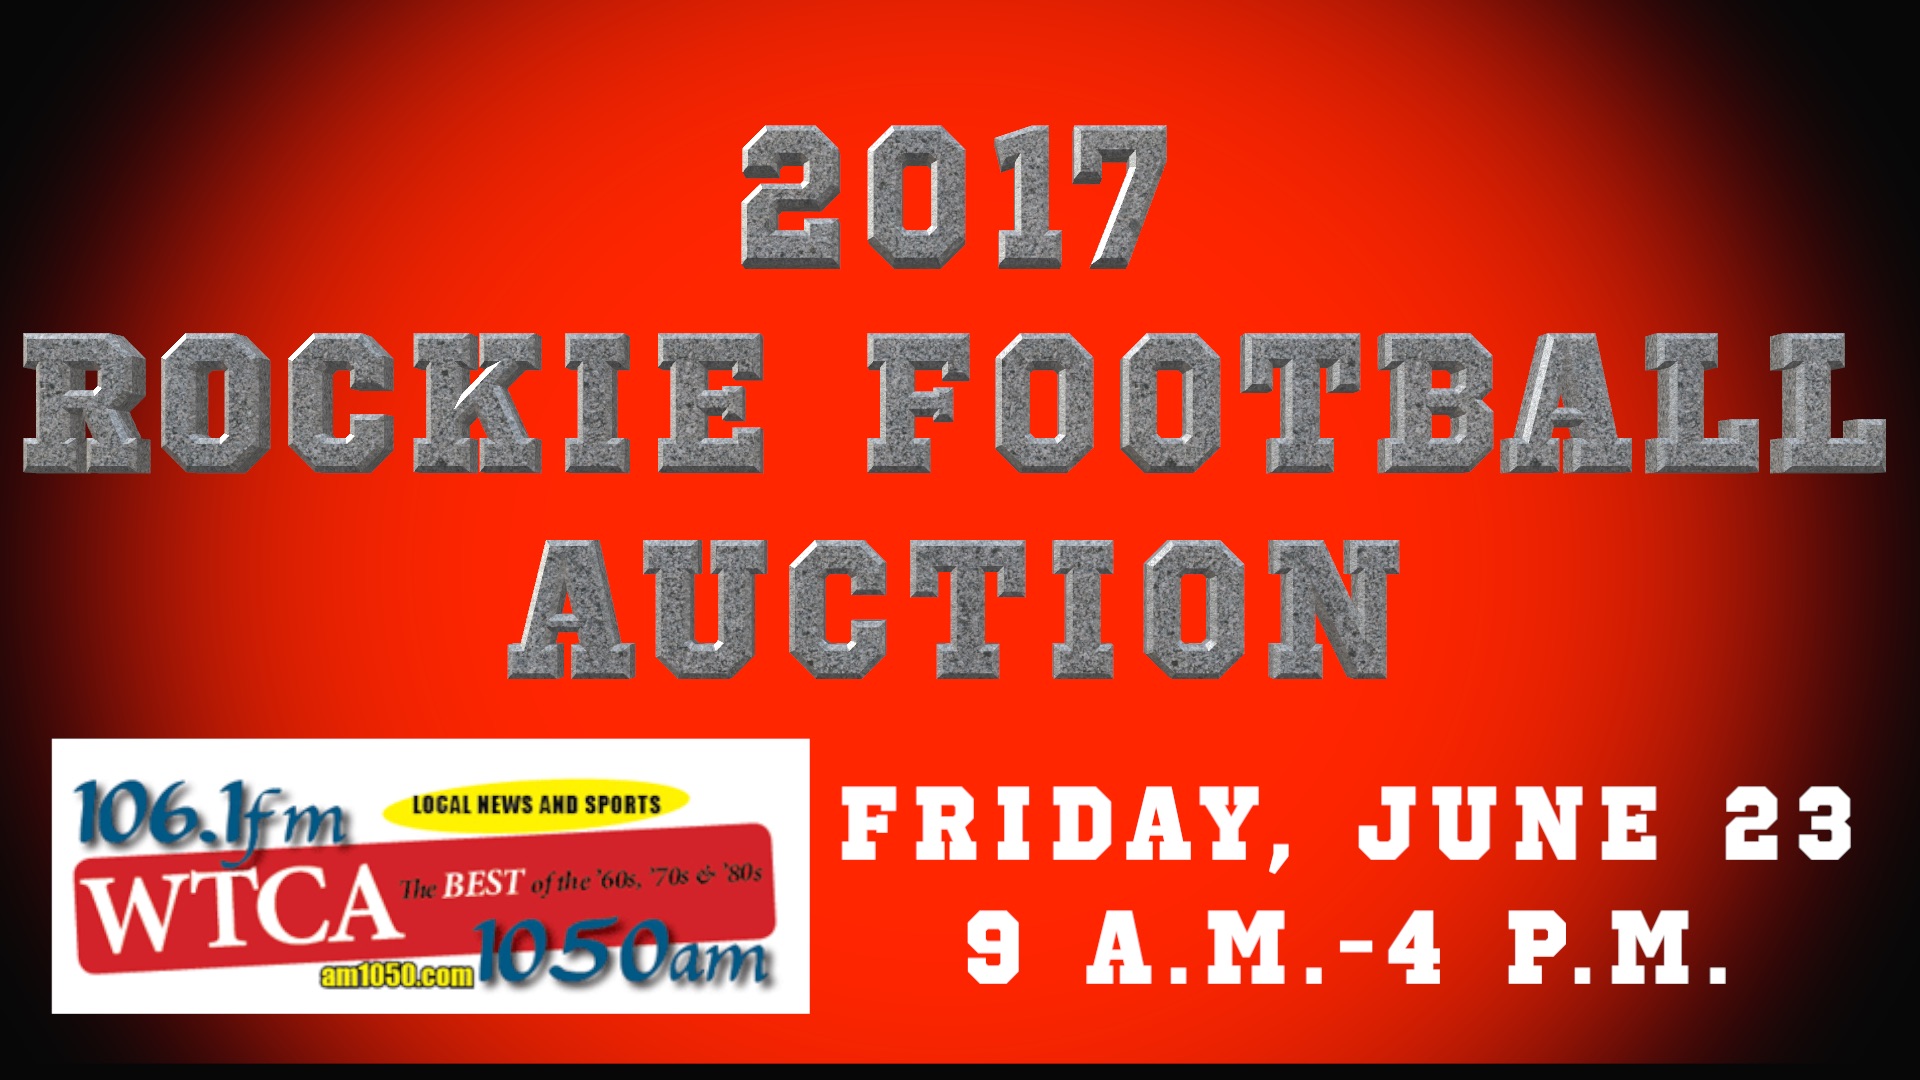 Rockies Football Auction